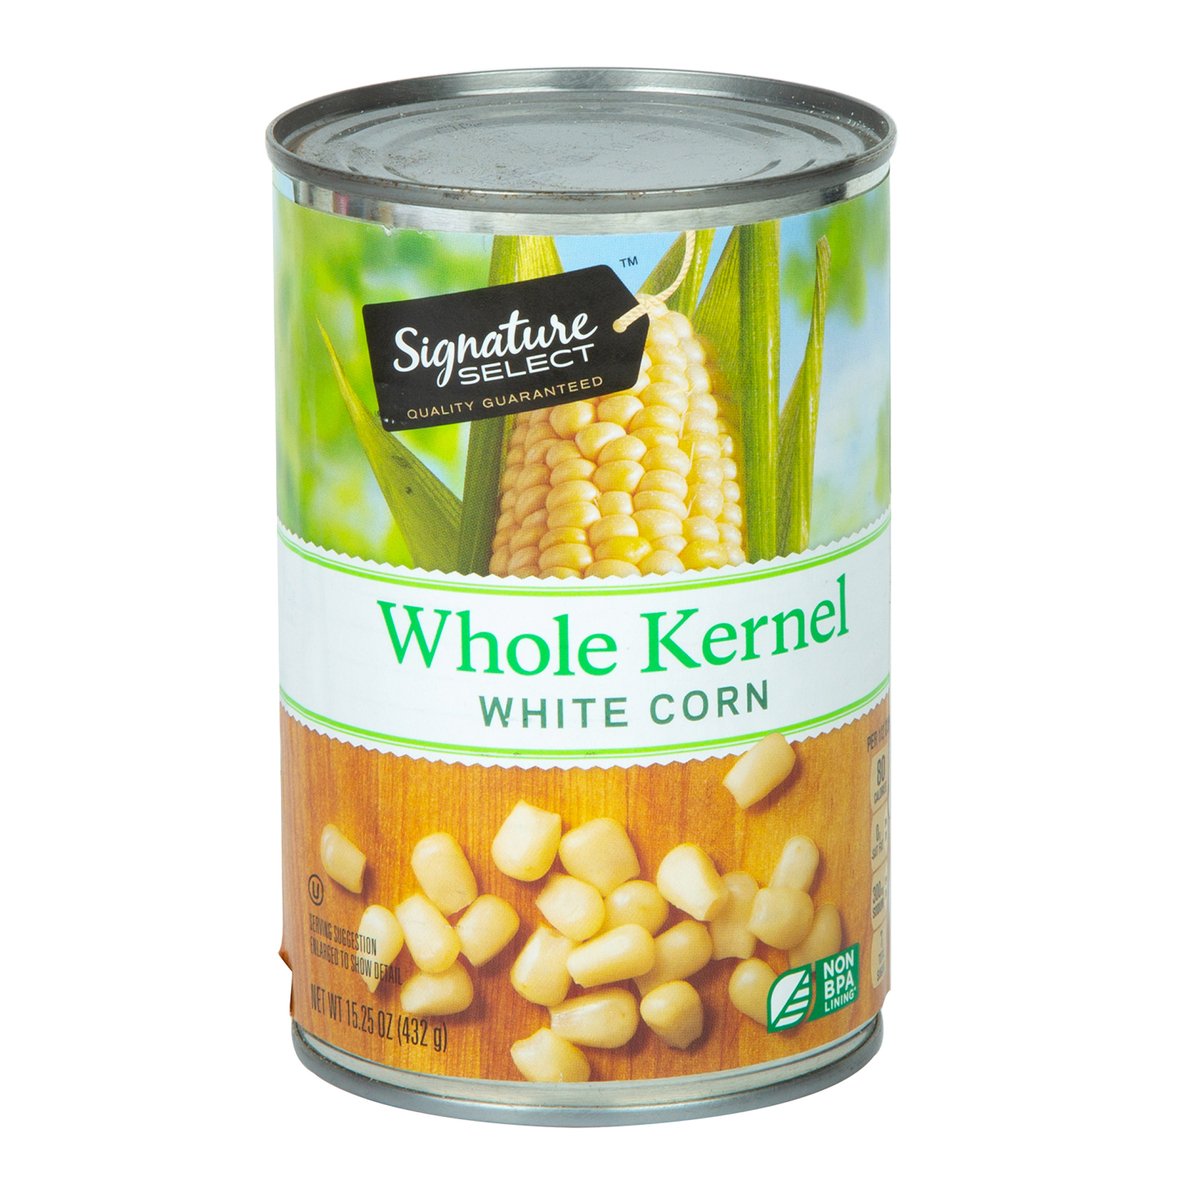 اشتري قم بشراء Signature Select Whole Kernel White Corn 432 g Online at Best Price من الموقع - من لولو هايبر ماركت Cand Whl.Kernel Corn في الكويت